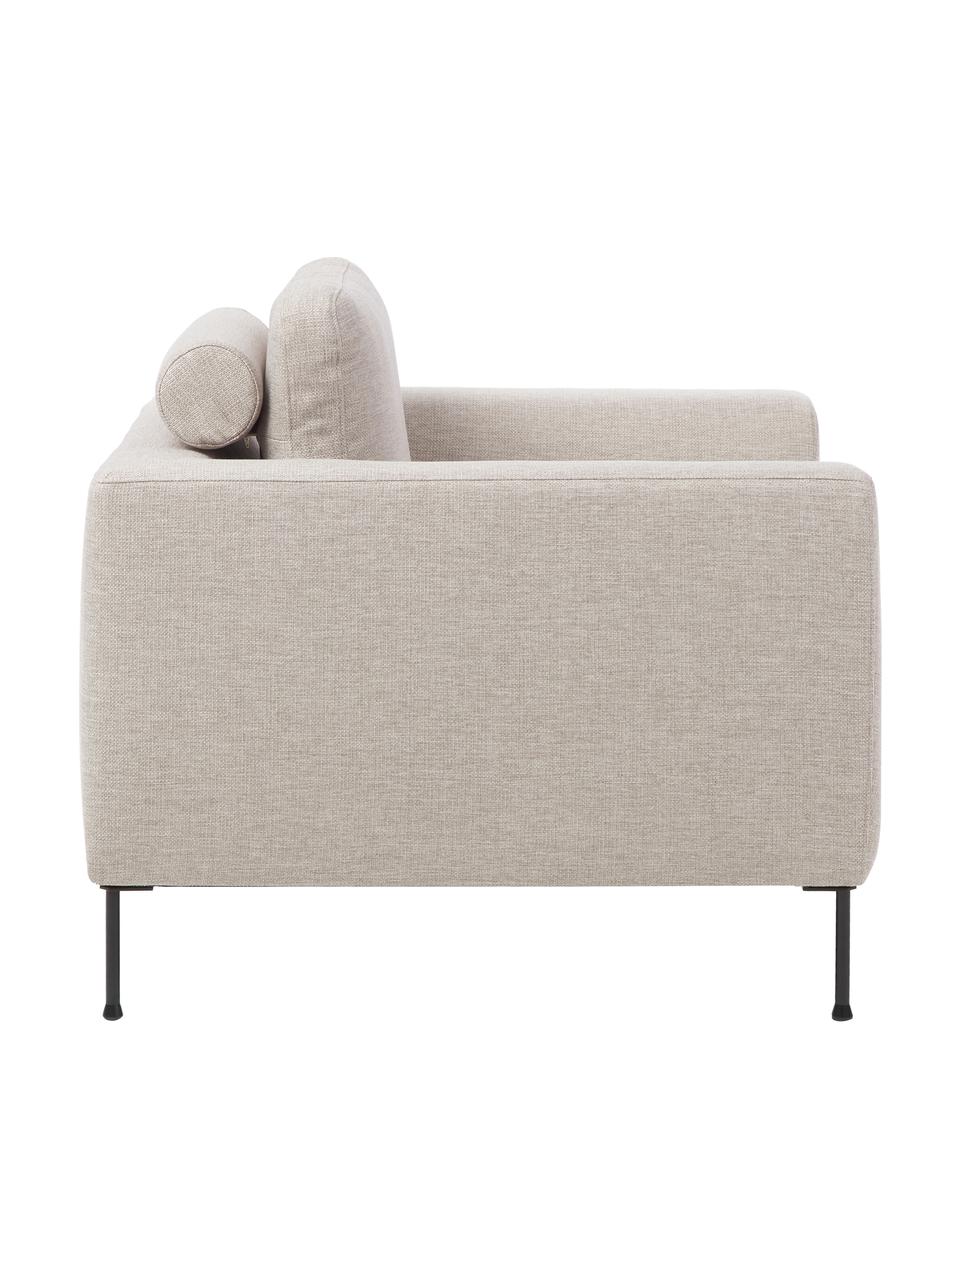 Sofa-Sessel Cucita in Beige mit Metall-Füßen, Bezug: Webstoff (100% Polyester), Gestell: Massives Kiefernholz, FSC, Füße: Metall, lackiert, Webstoff Beige, B 98 x T 94 cm